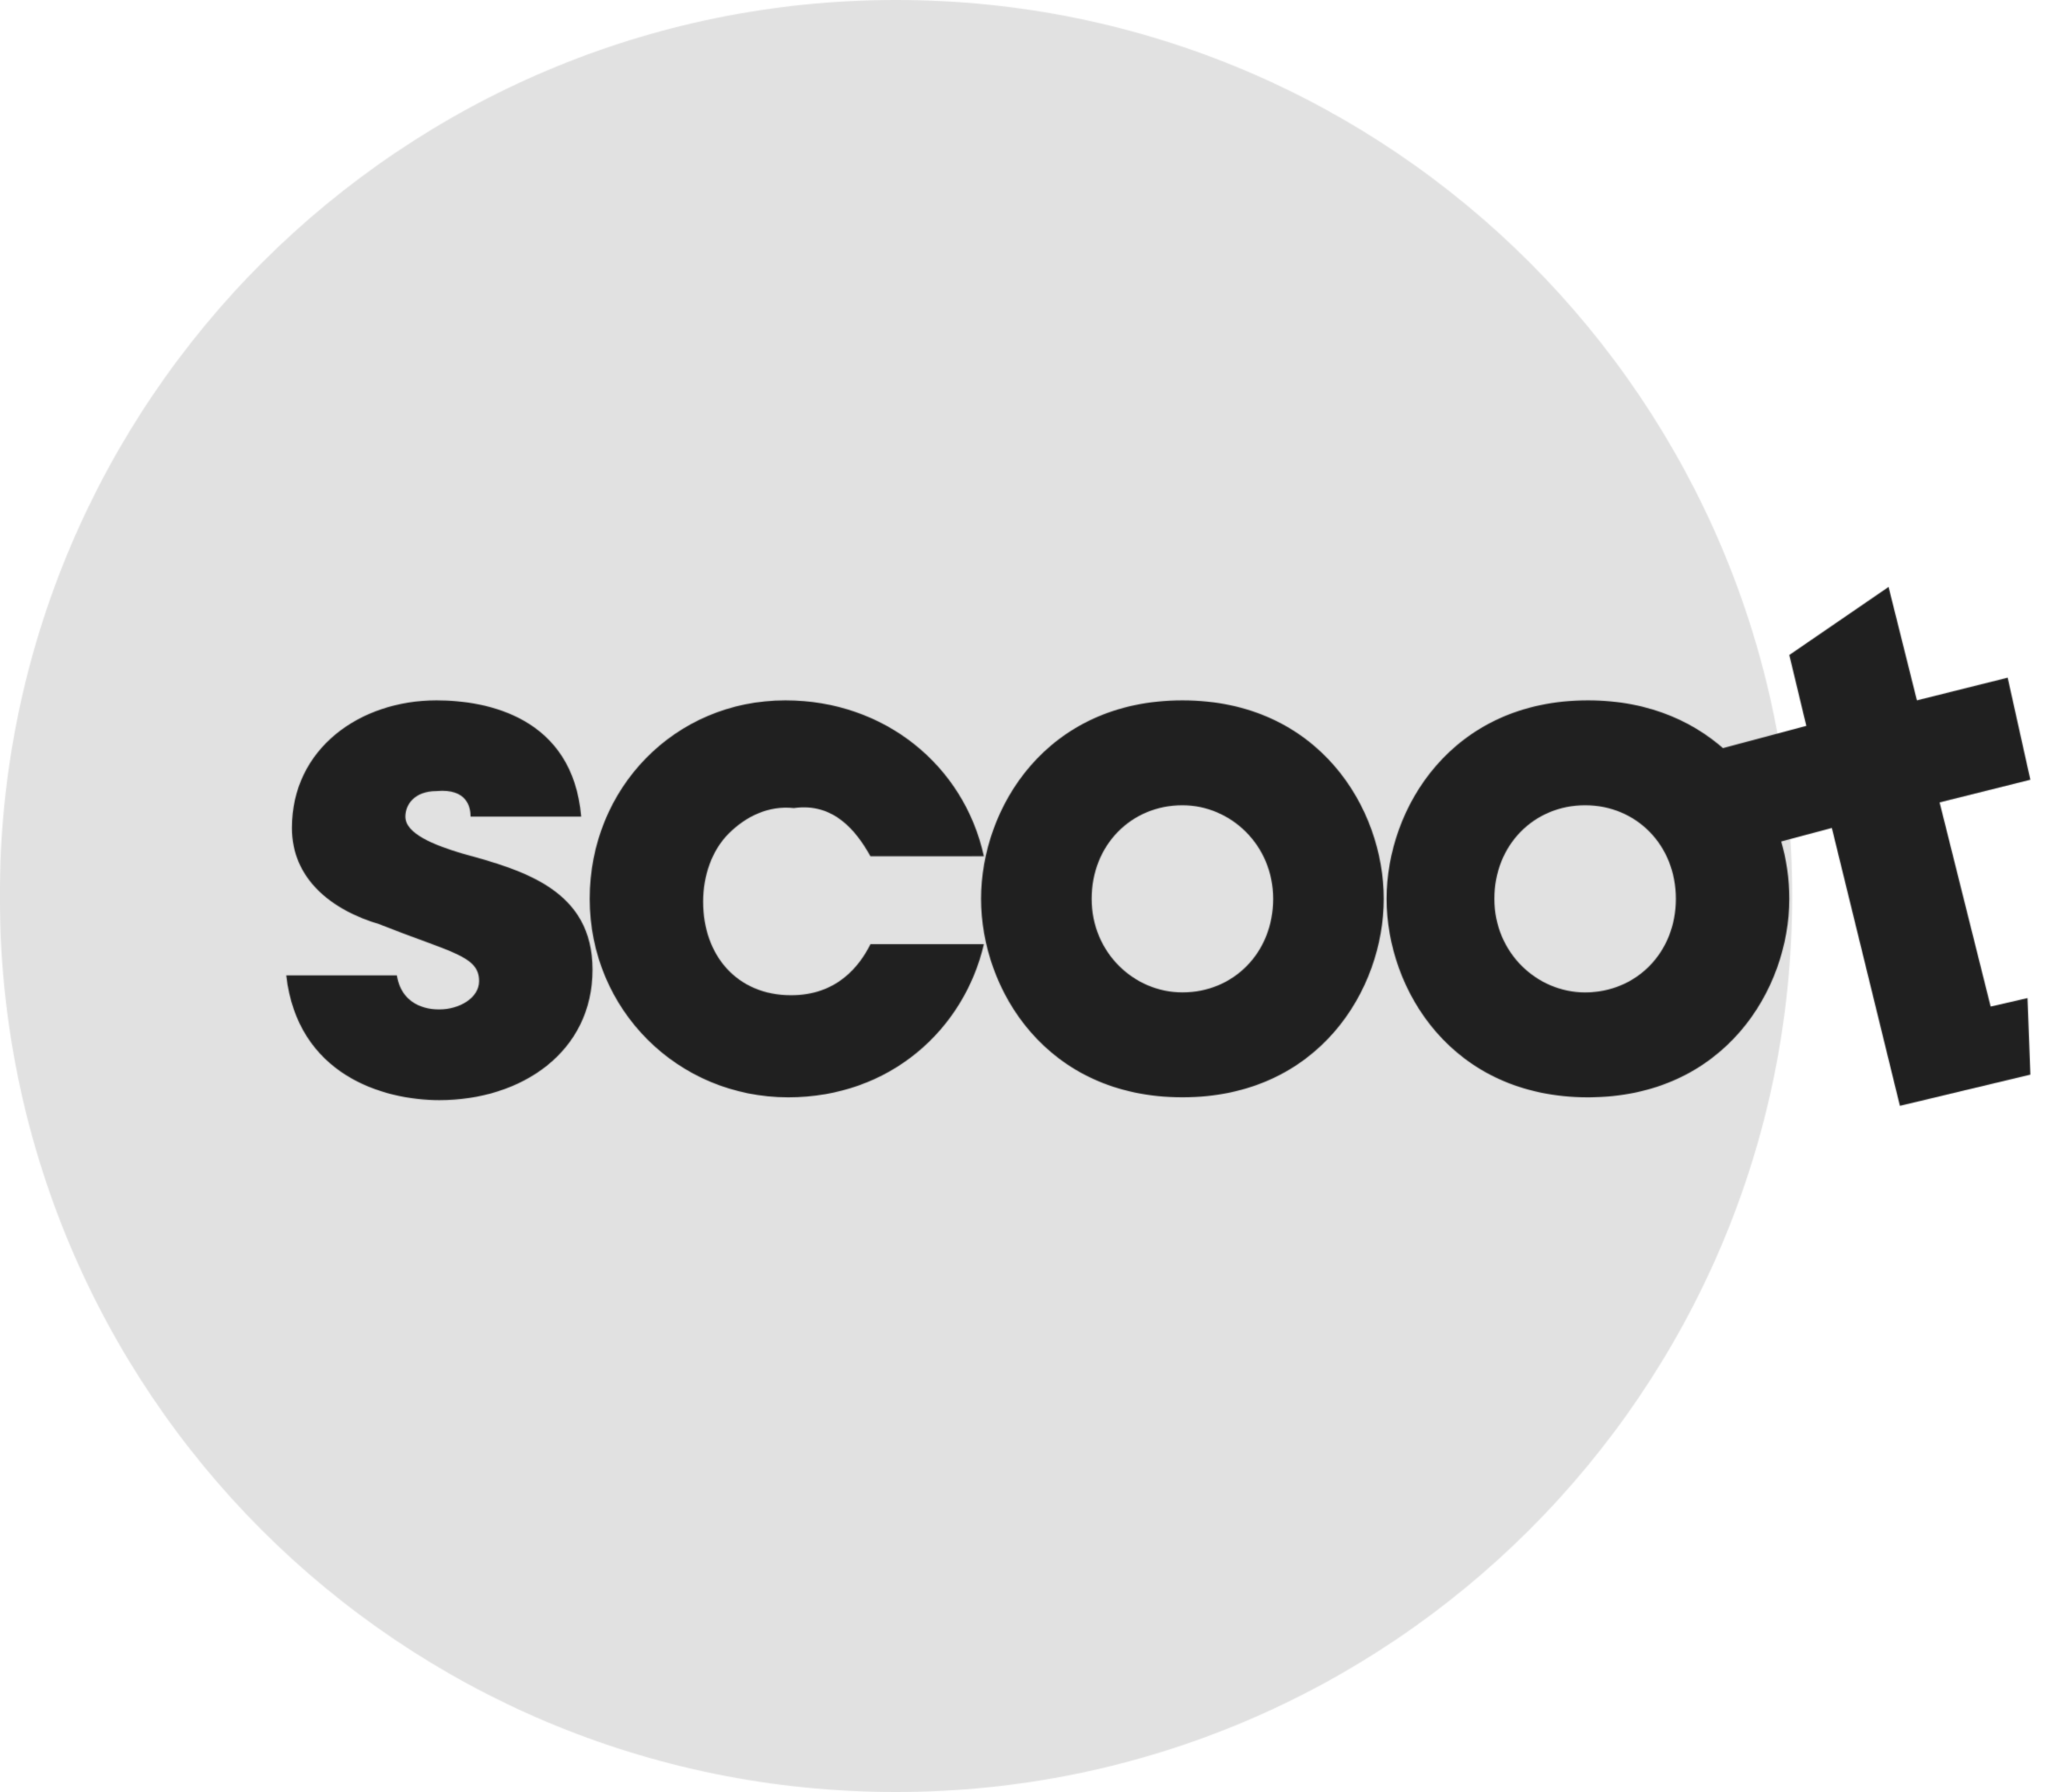 Scoot_logo 1